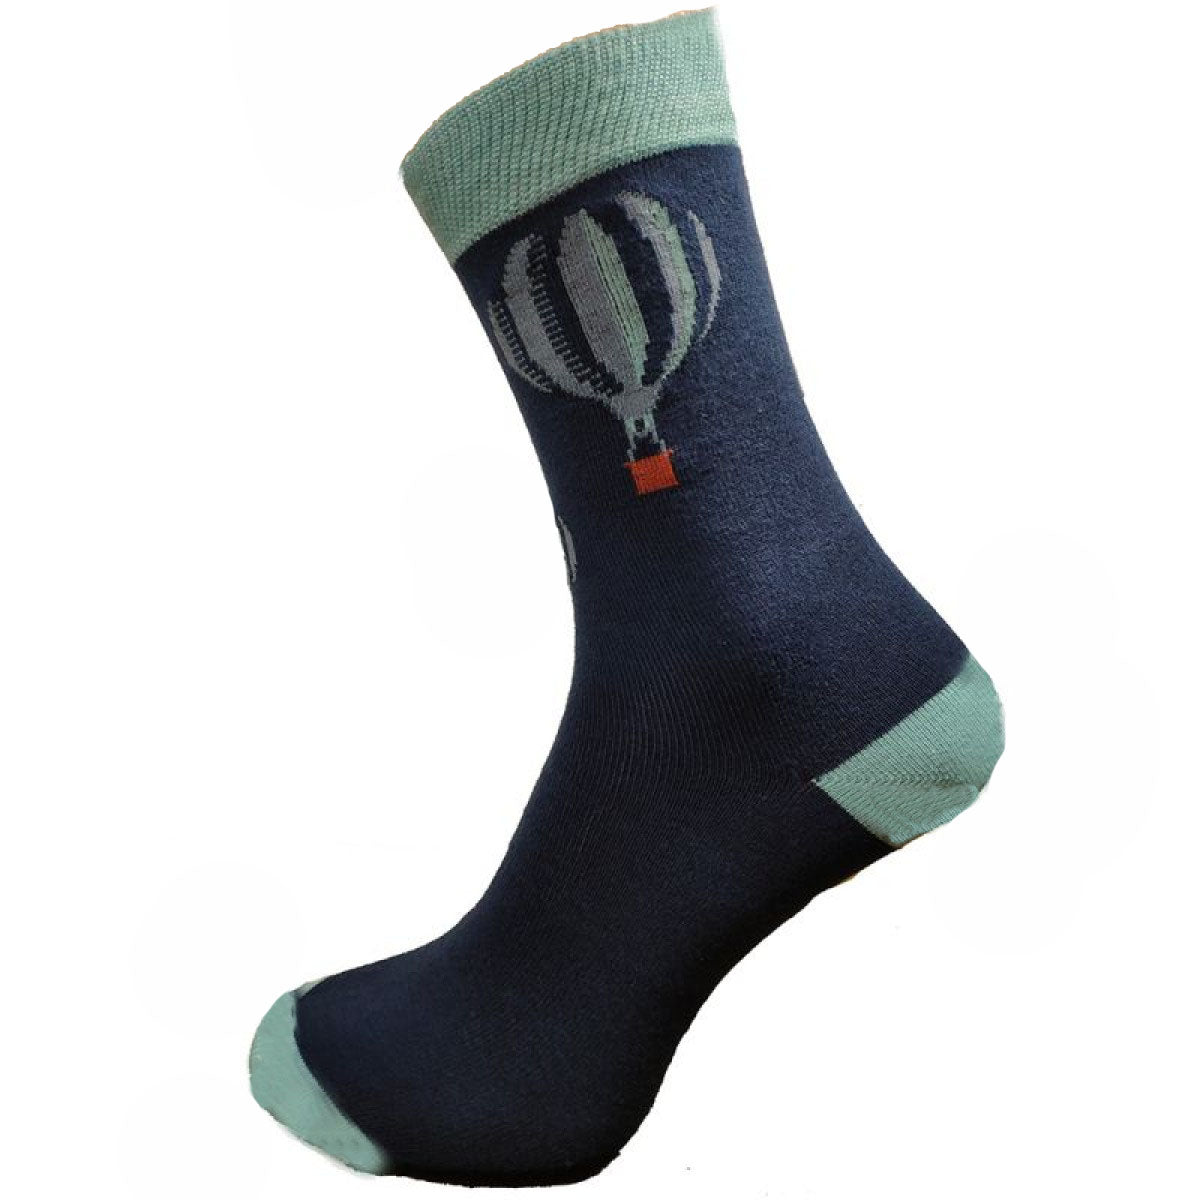 Dark blue bamboo sock with air ballon motif, pale blue heel toe and cuff, size 7-12 UK